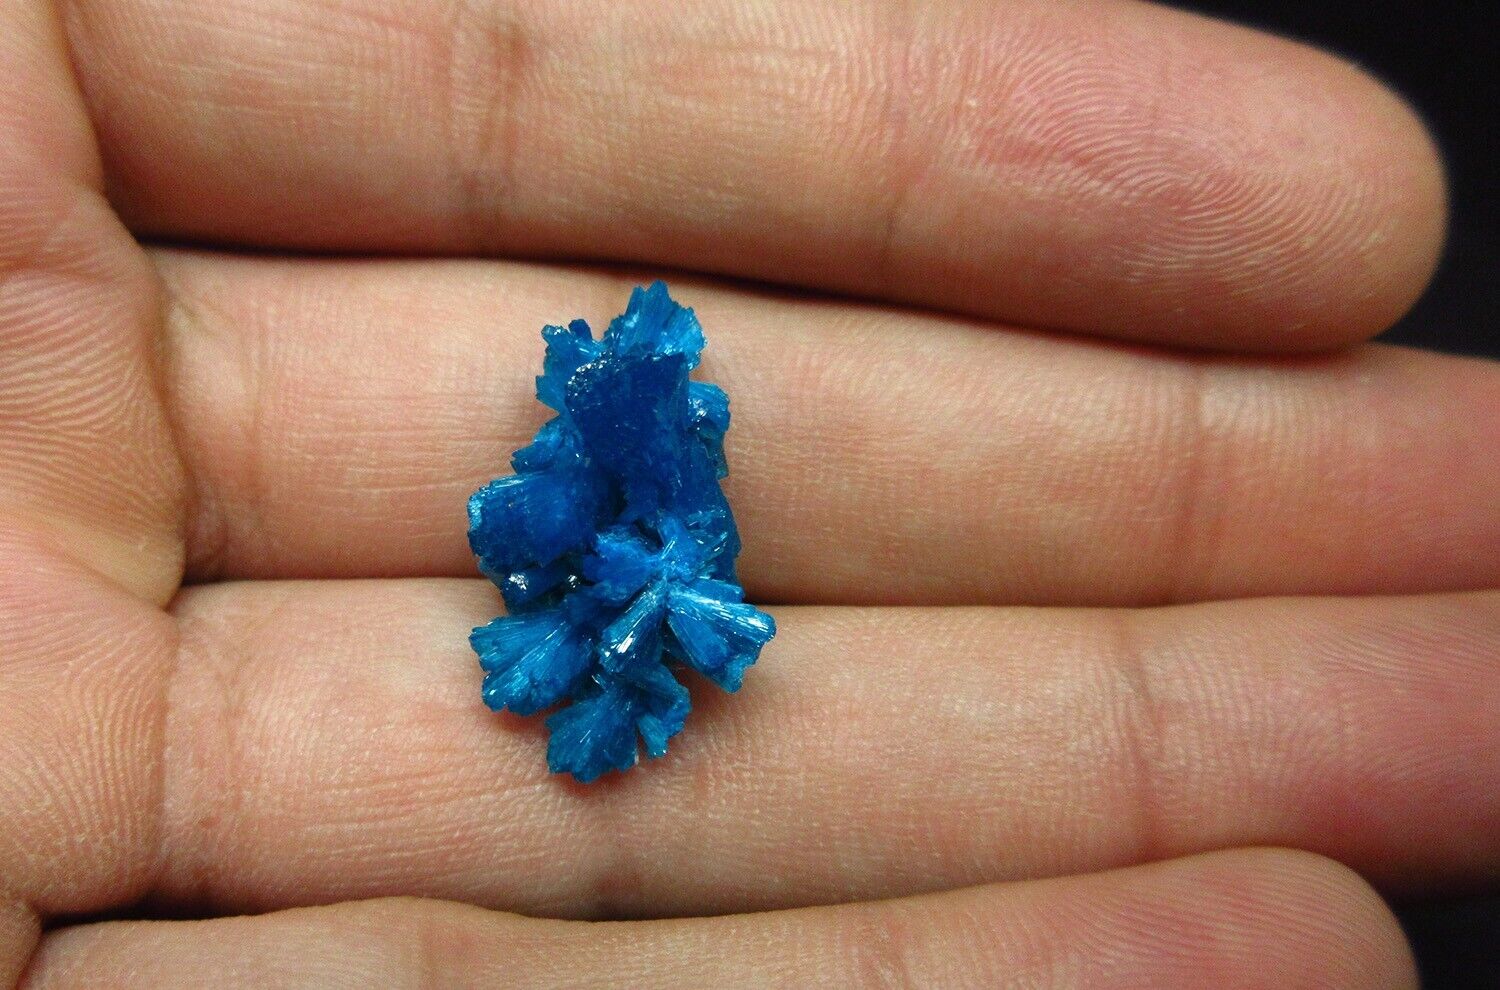 Dark blue Cavansite bowtie cluster (non-precious natural mineral) #2301